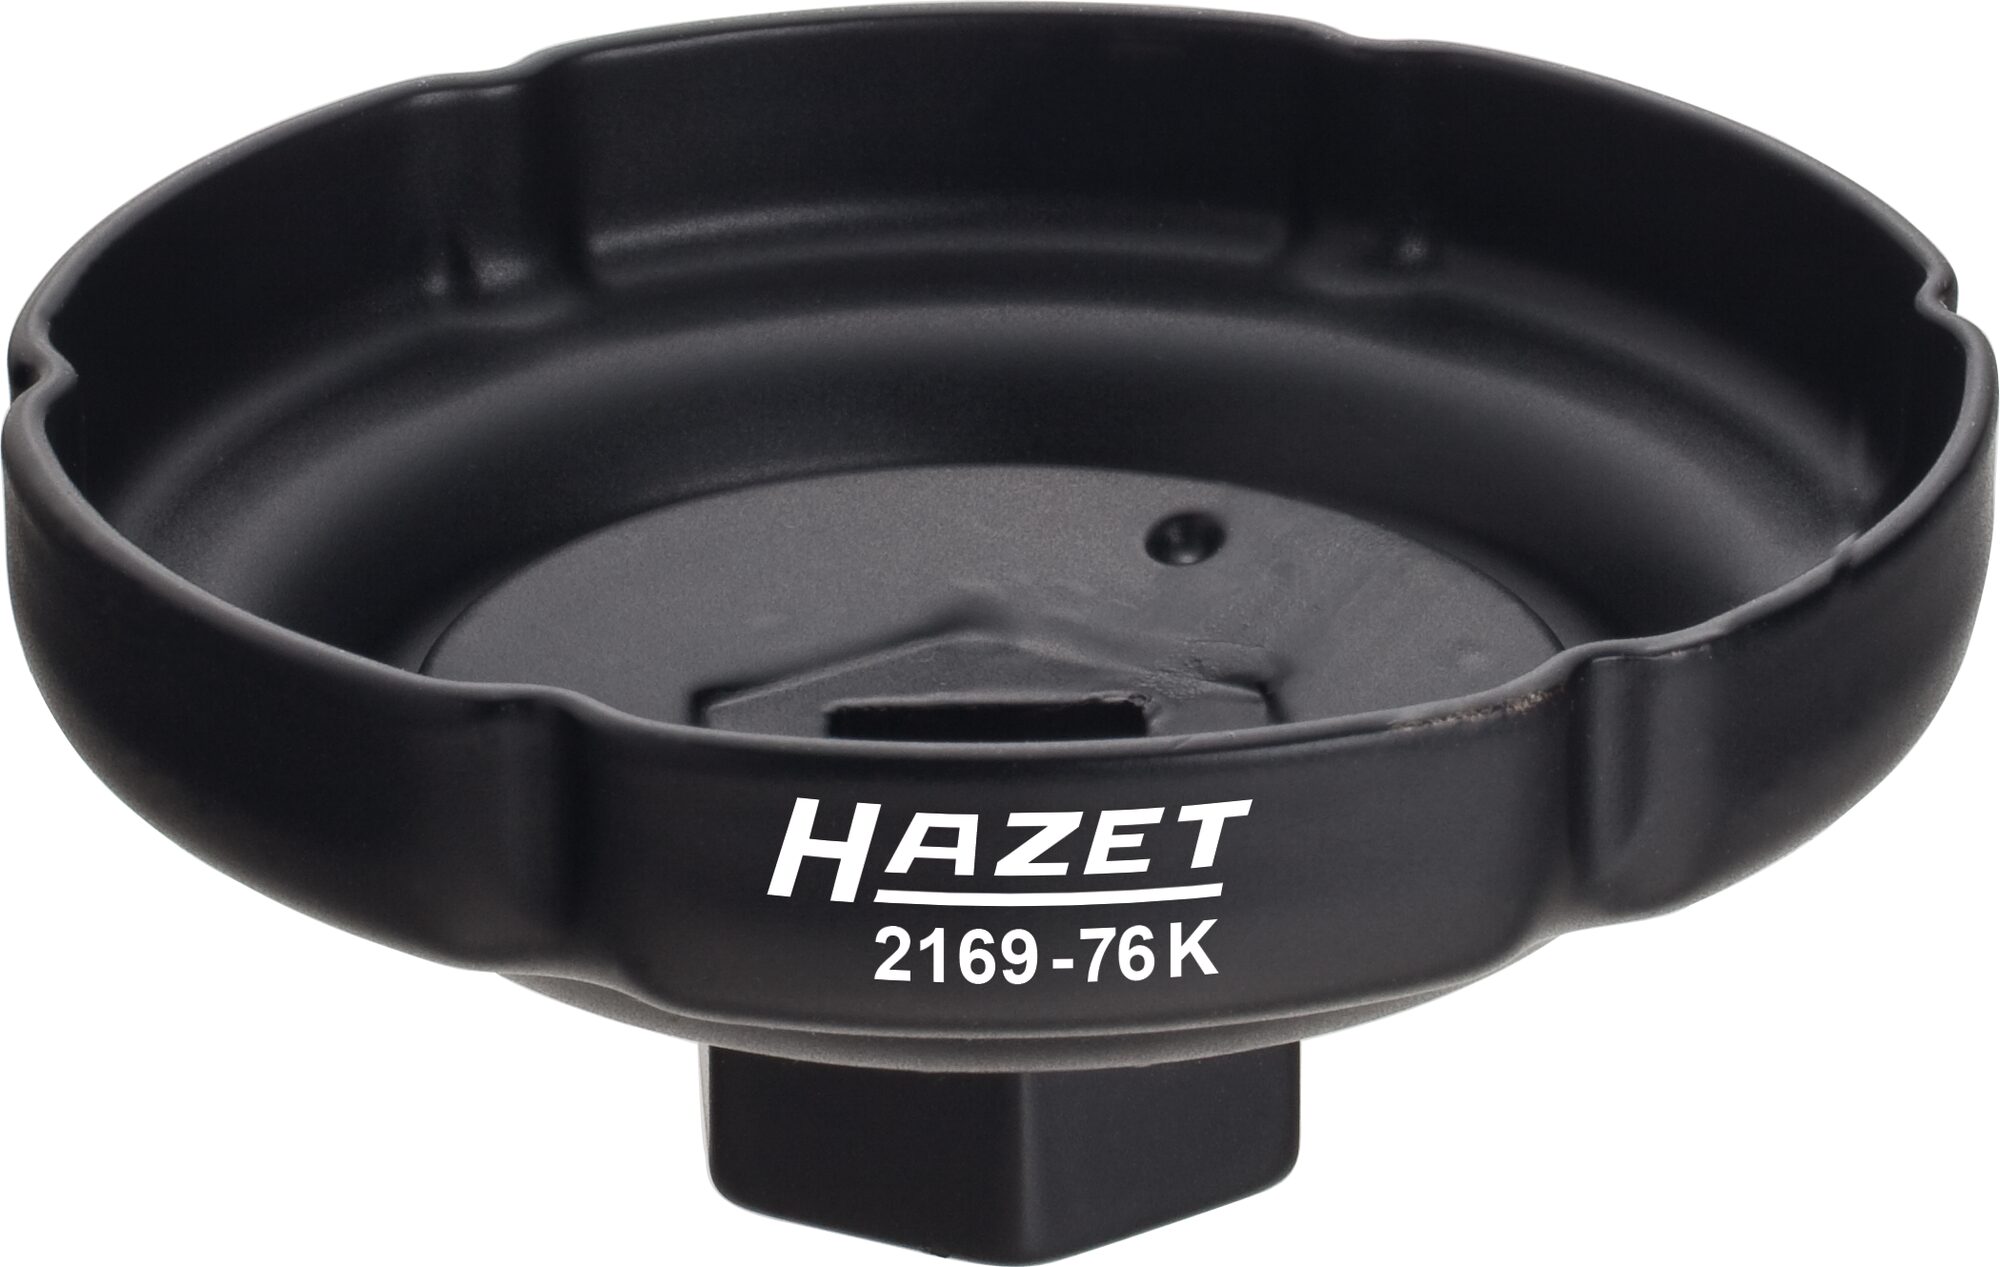 HAZET Ölfilter-Schlüssel 2169-76K · Vierkant hohl 12,5 mm (1/2 Zoll) · Rillenprofil · 85 mm